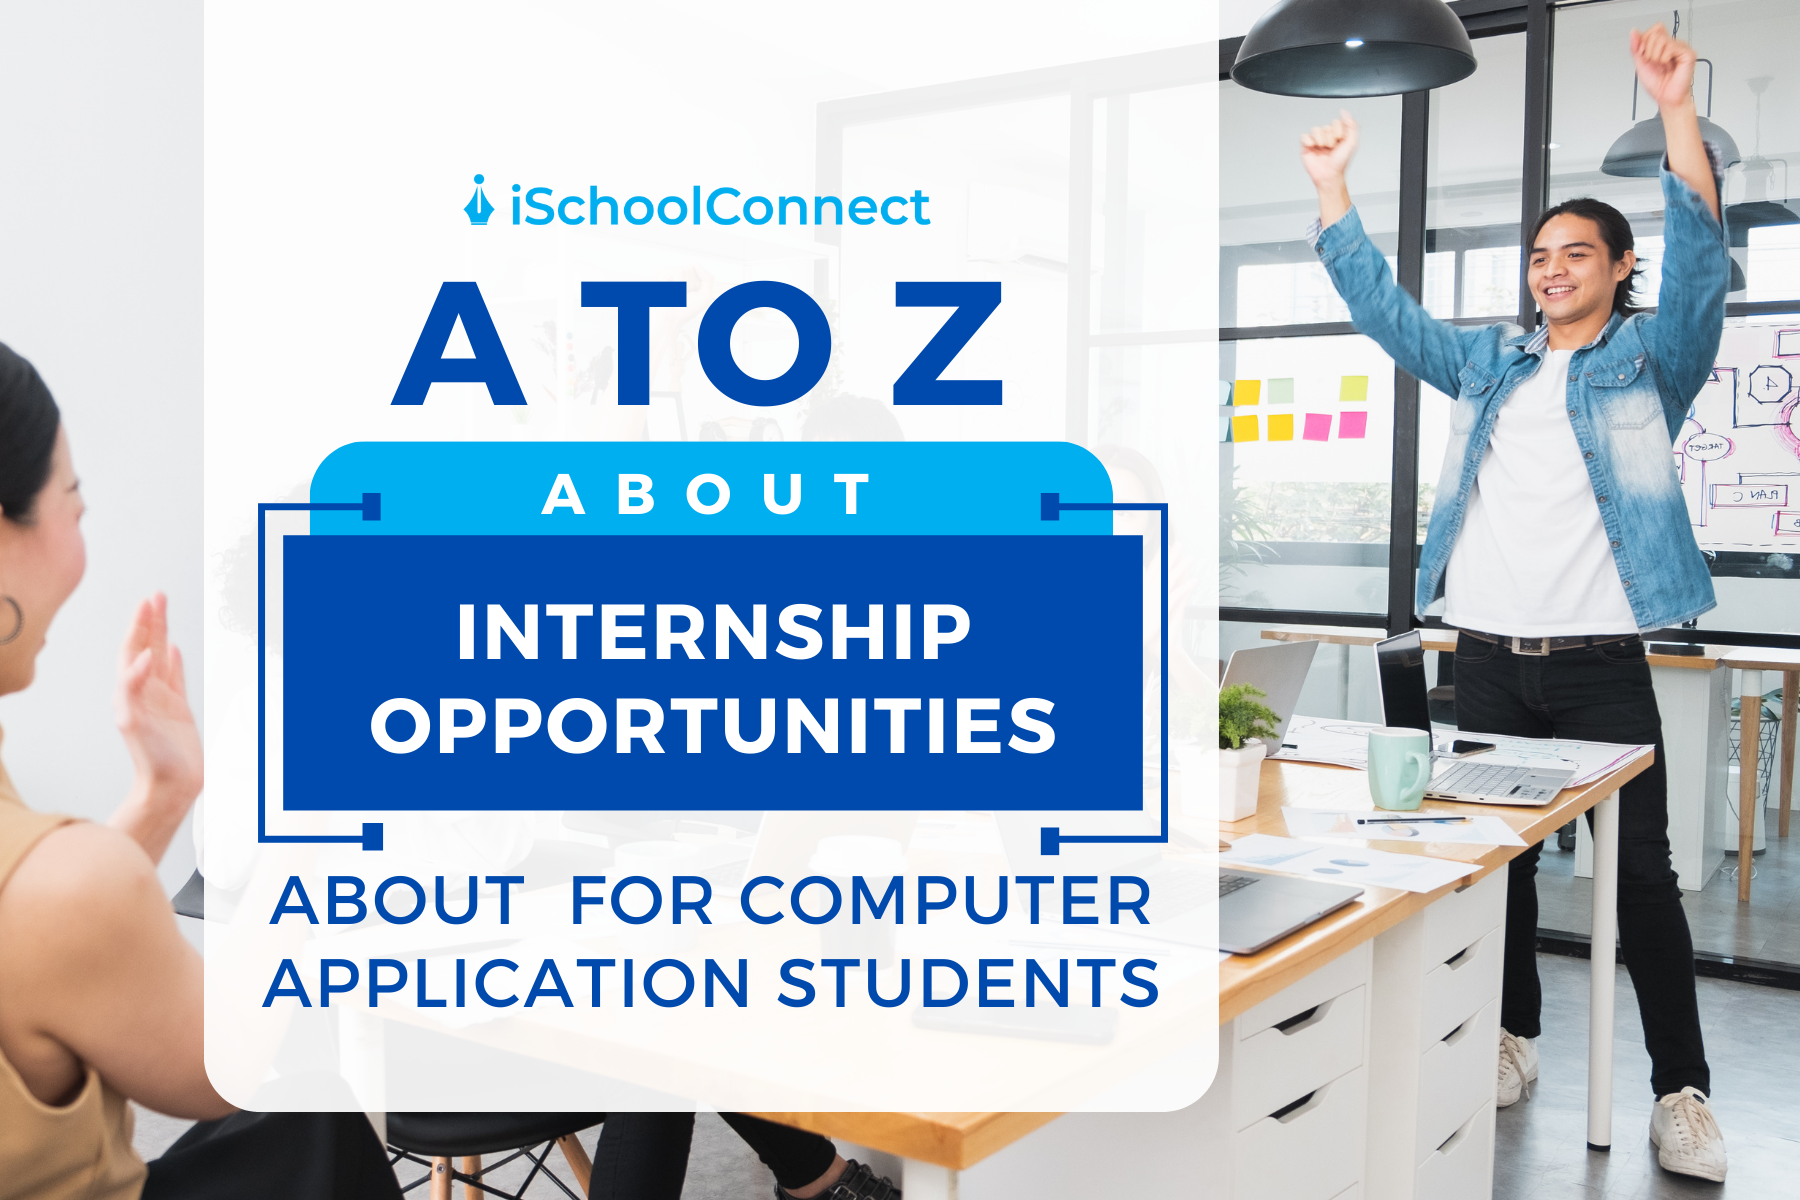 Computer application course | Internship opportunities